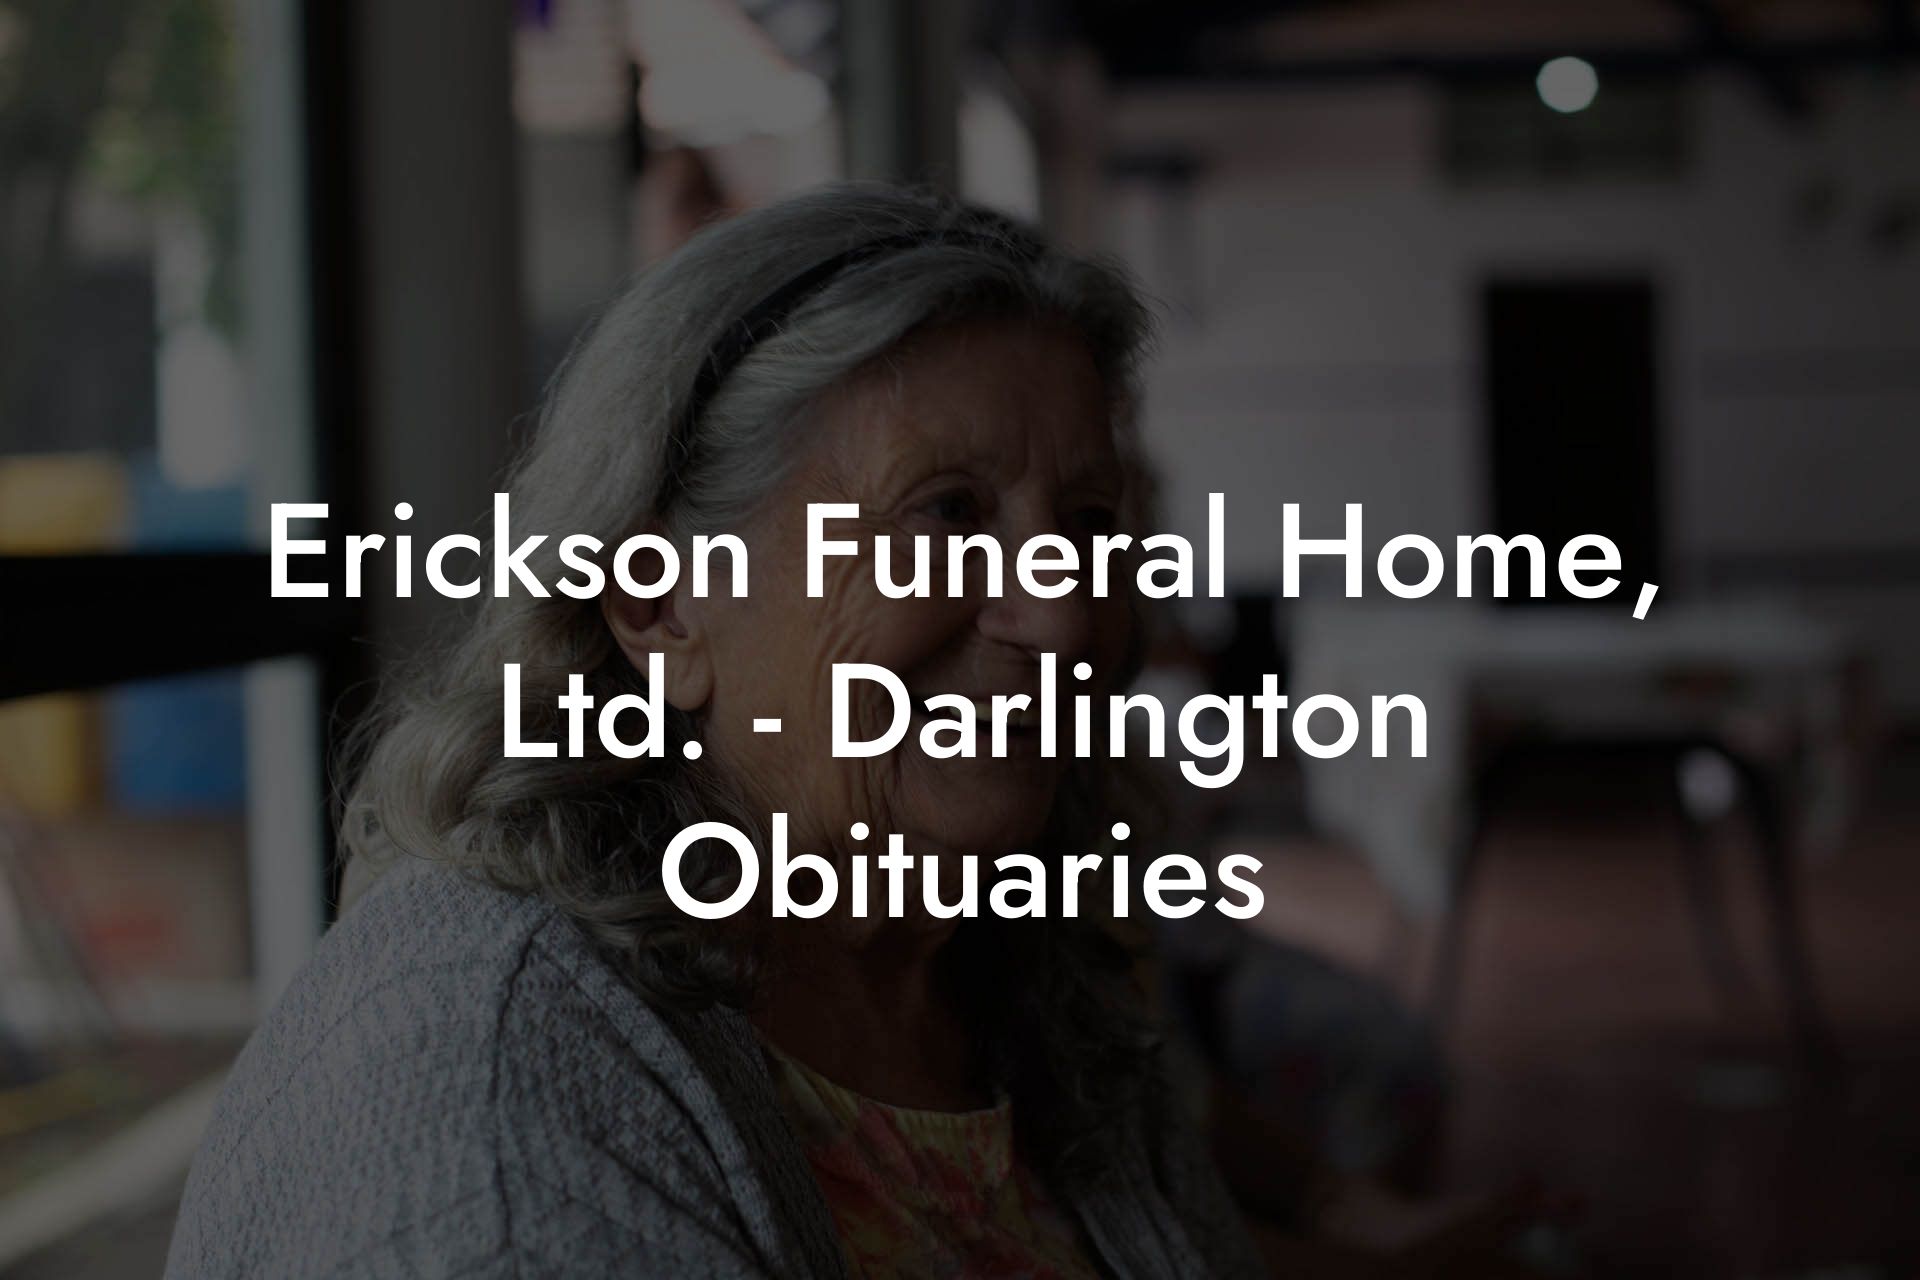 Erickson Funeral Home, Ltd. - Darlington Obituaries